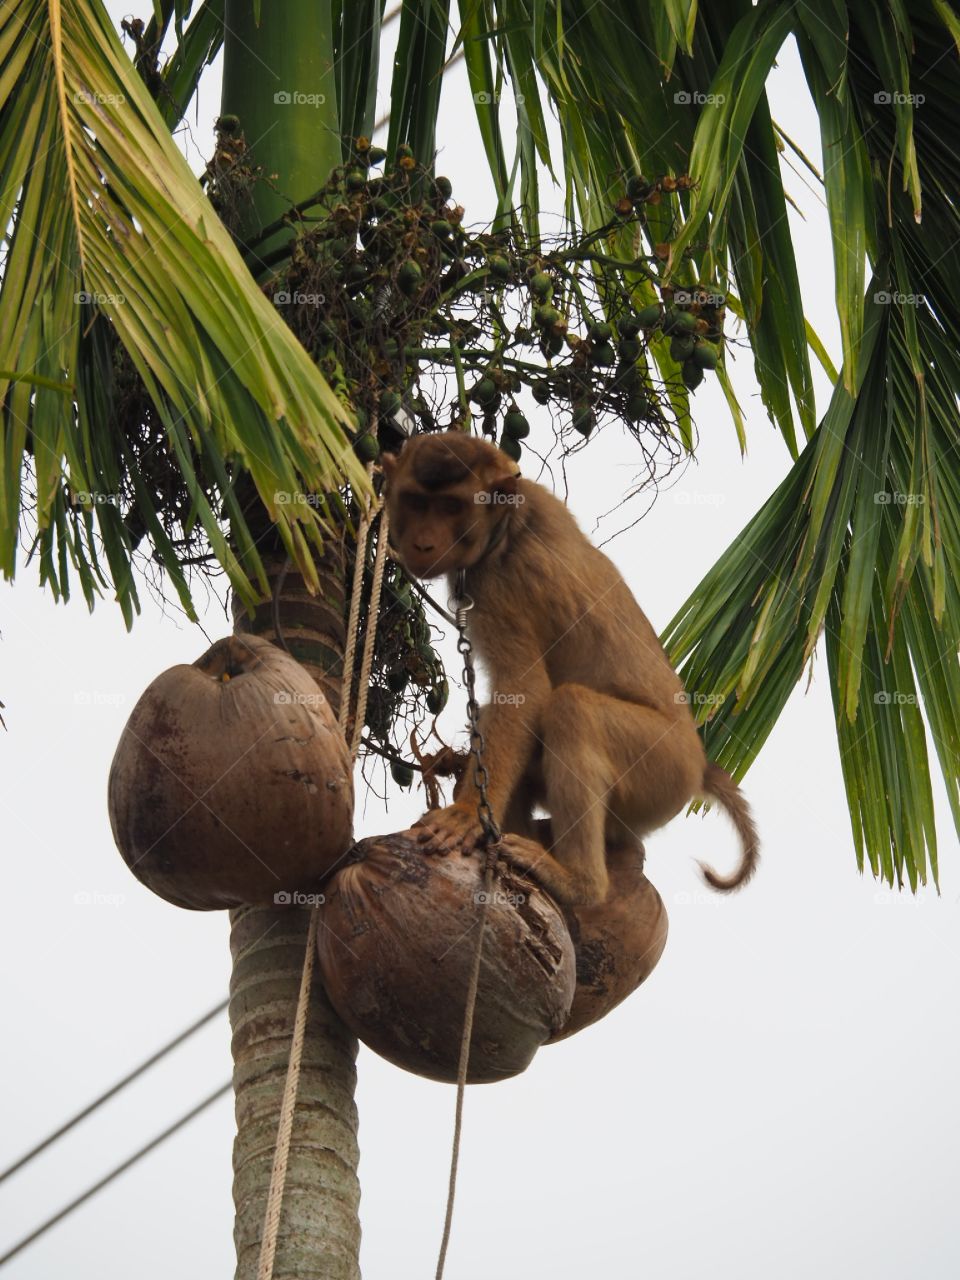 Training a monkey to work